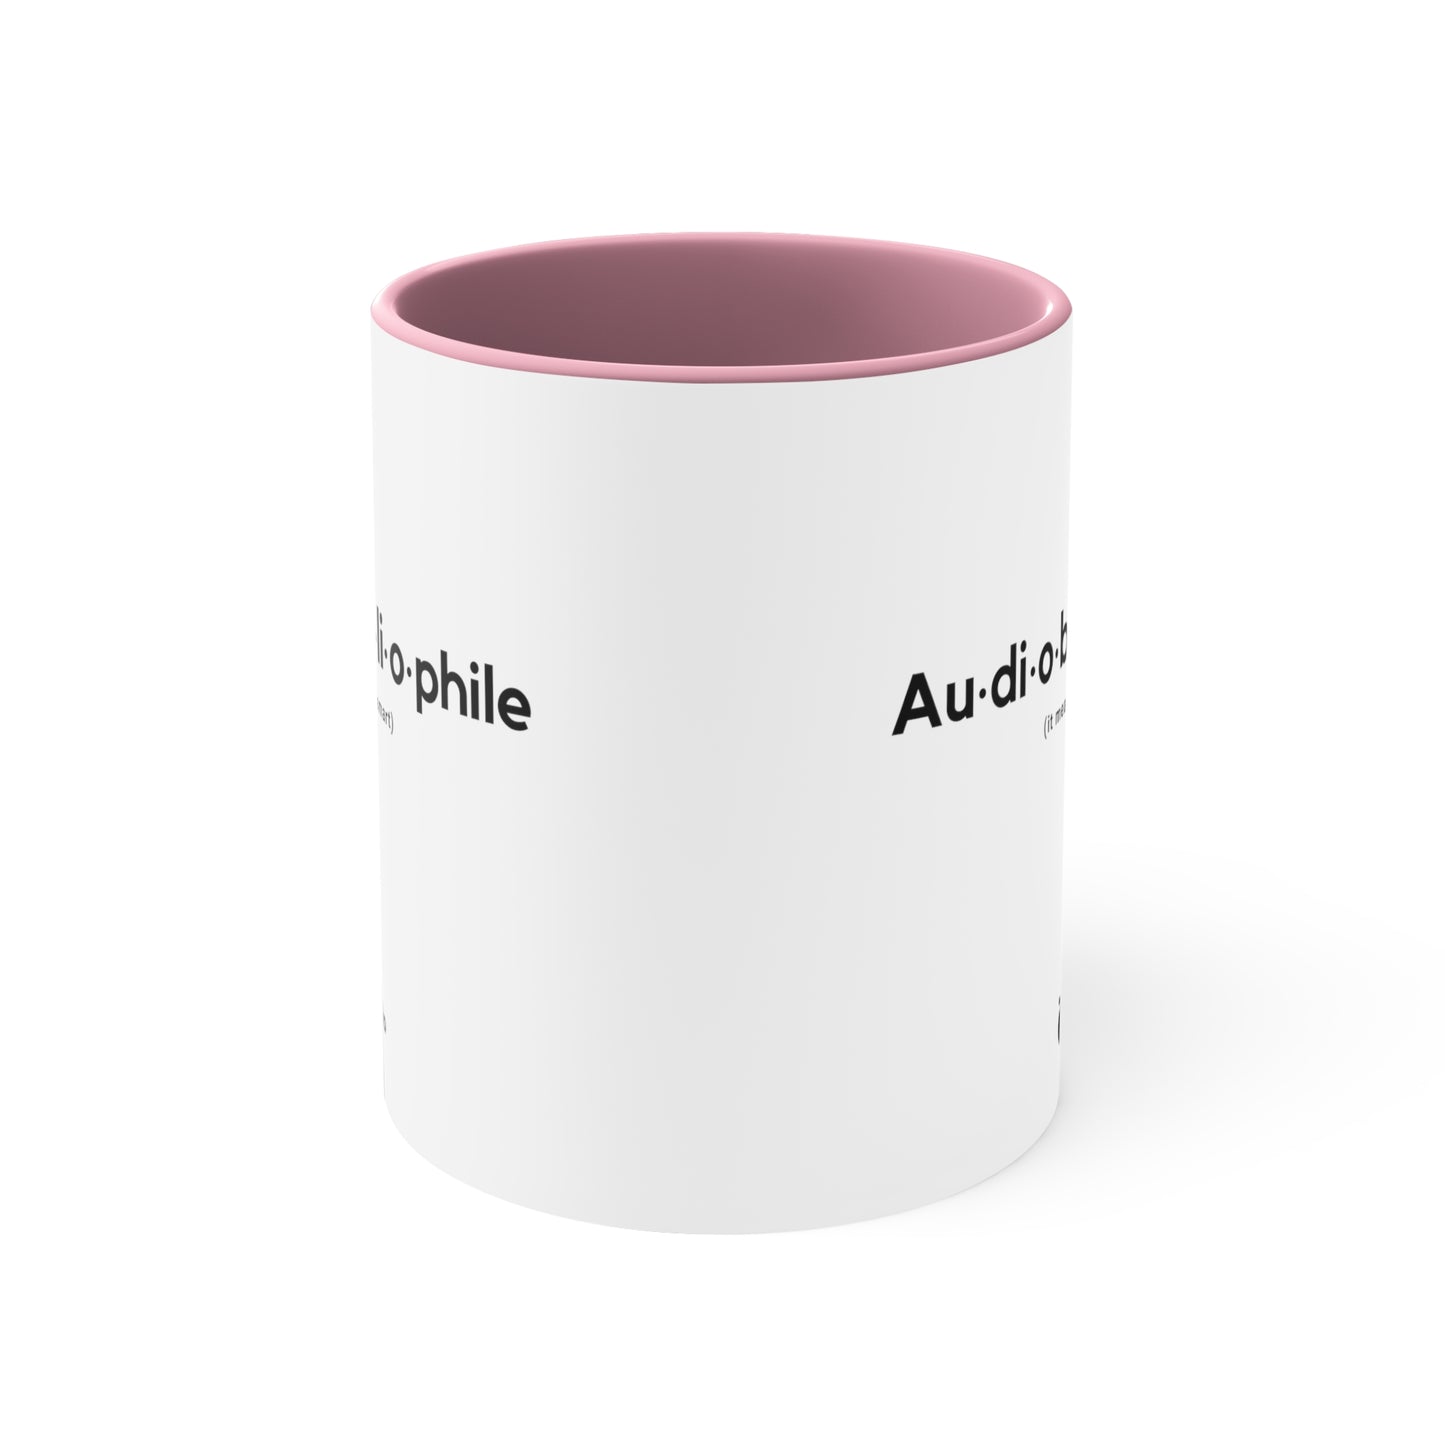 Audiobibliophile Accent Coffee Mug, 11oz